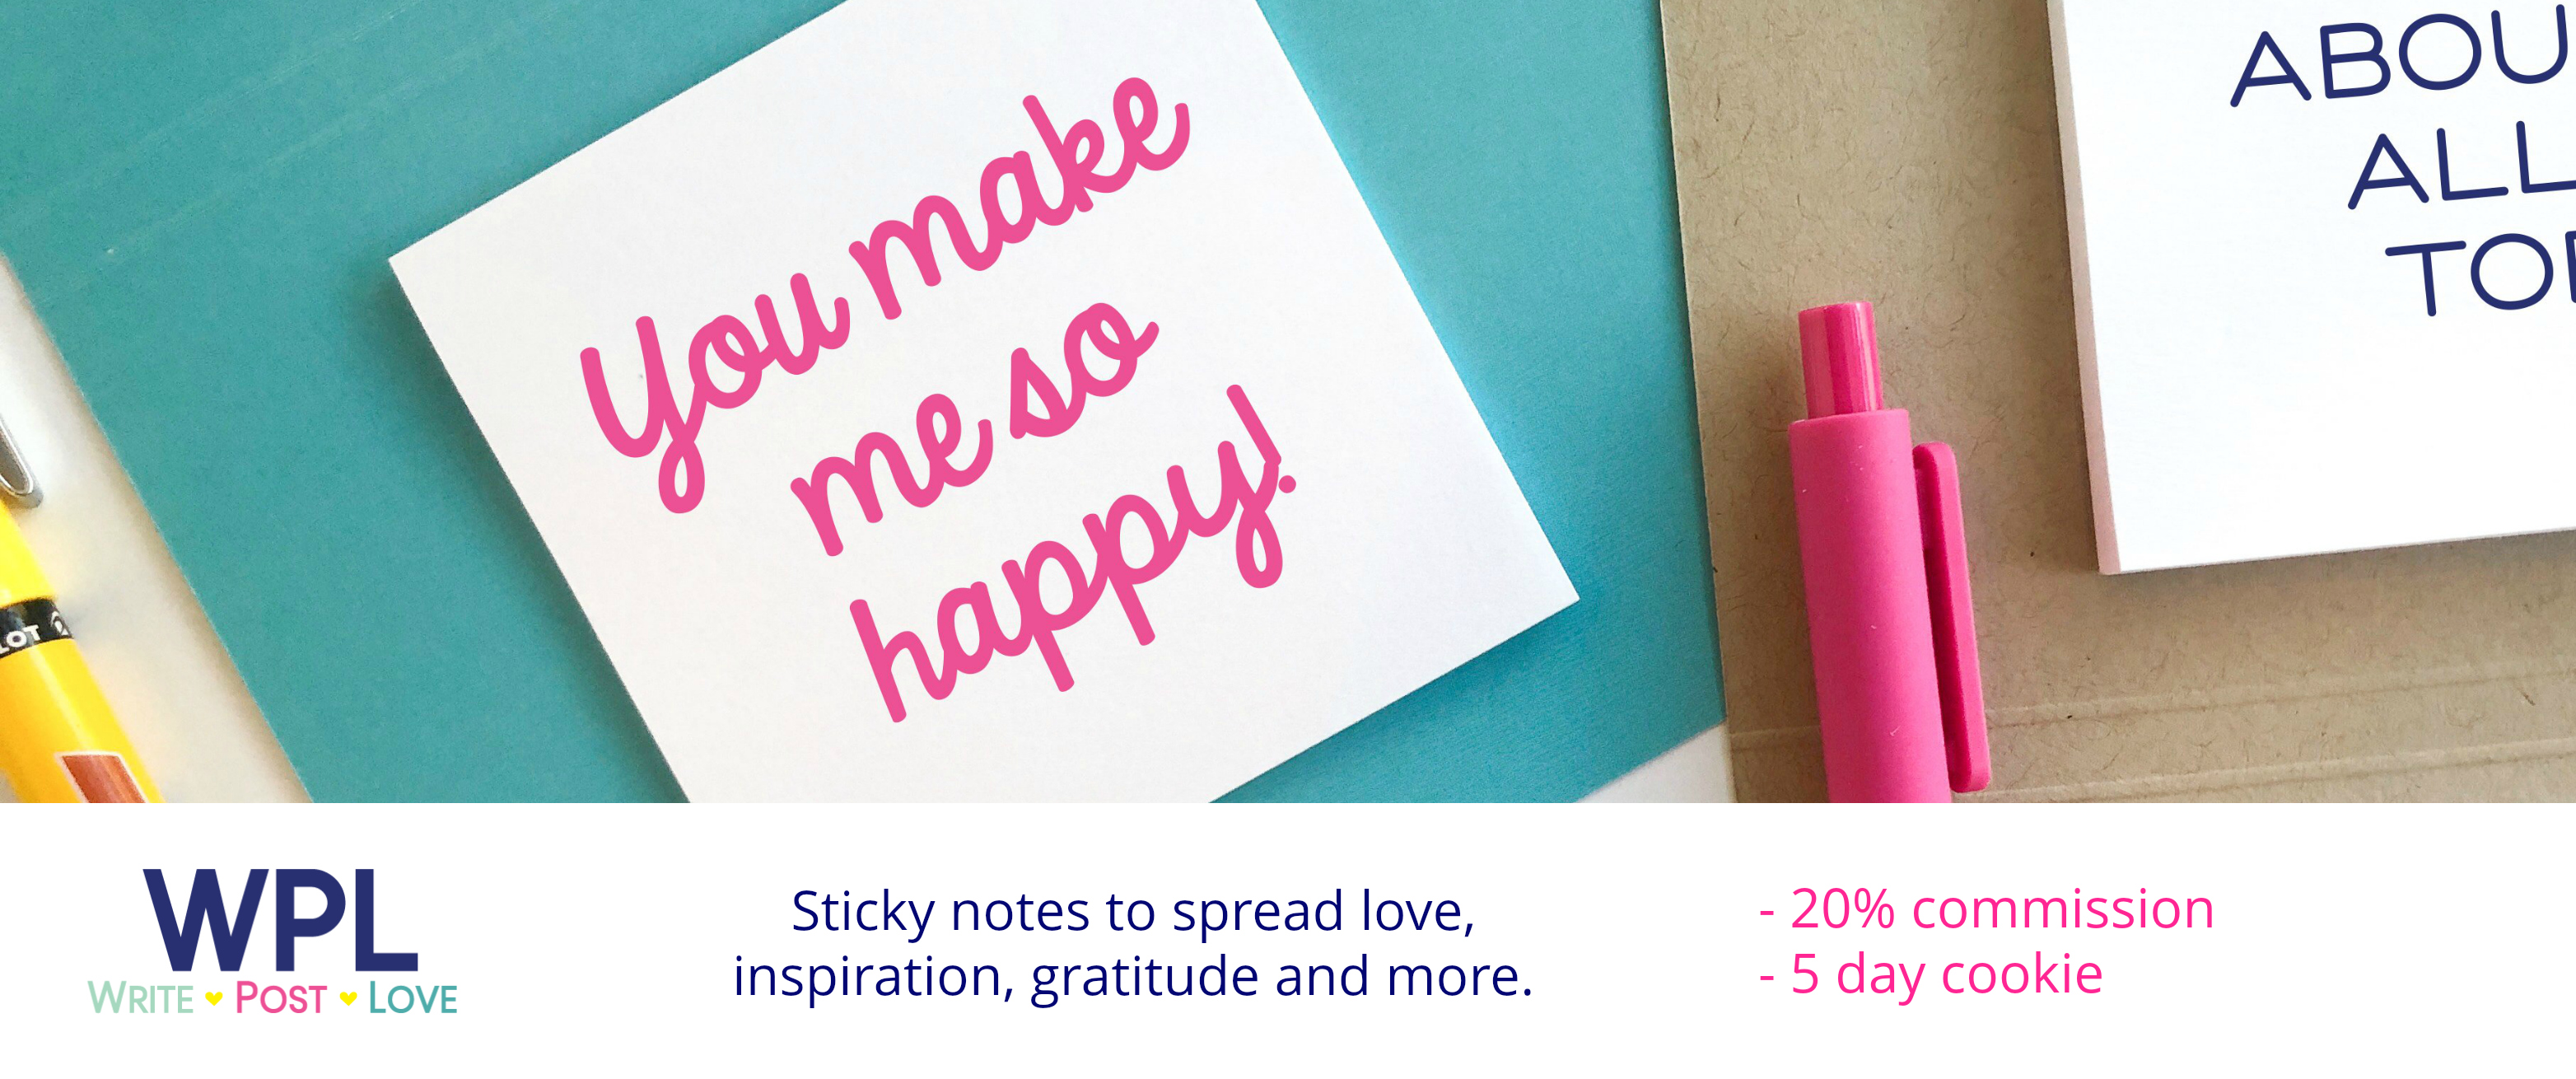 Write Post Love - Inspirational Sticky Notes